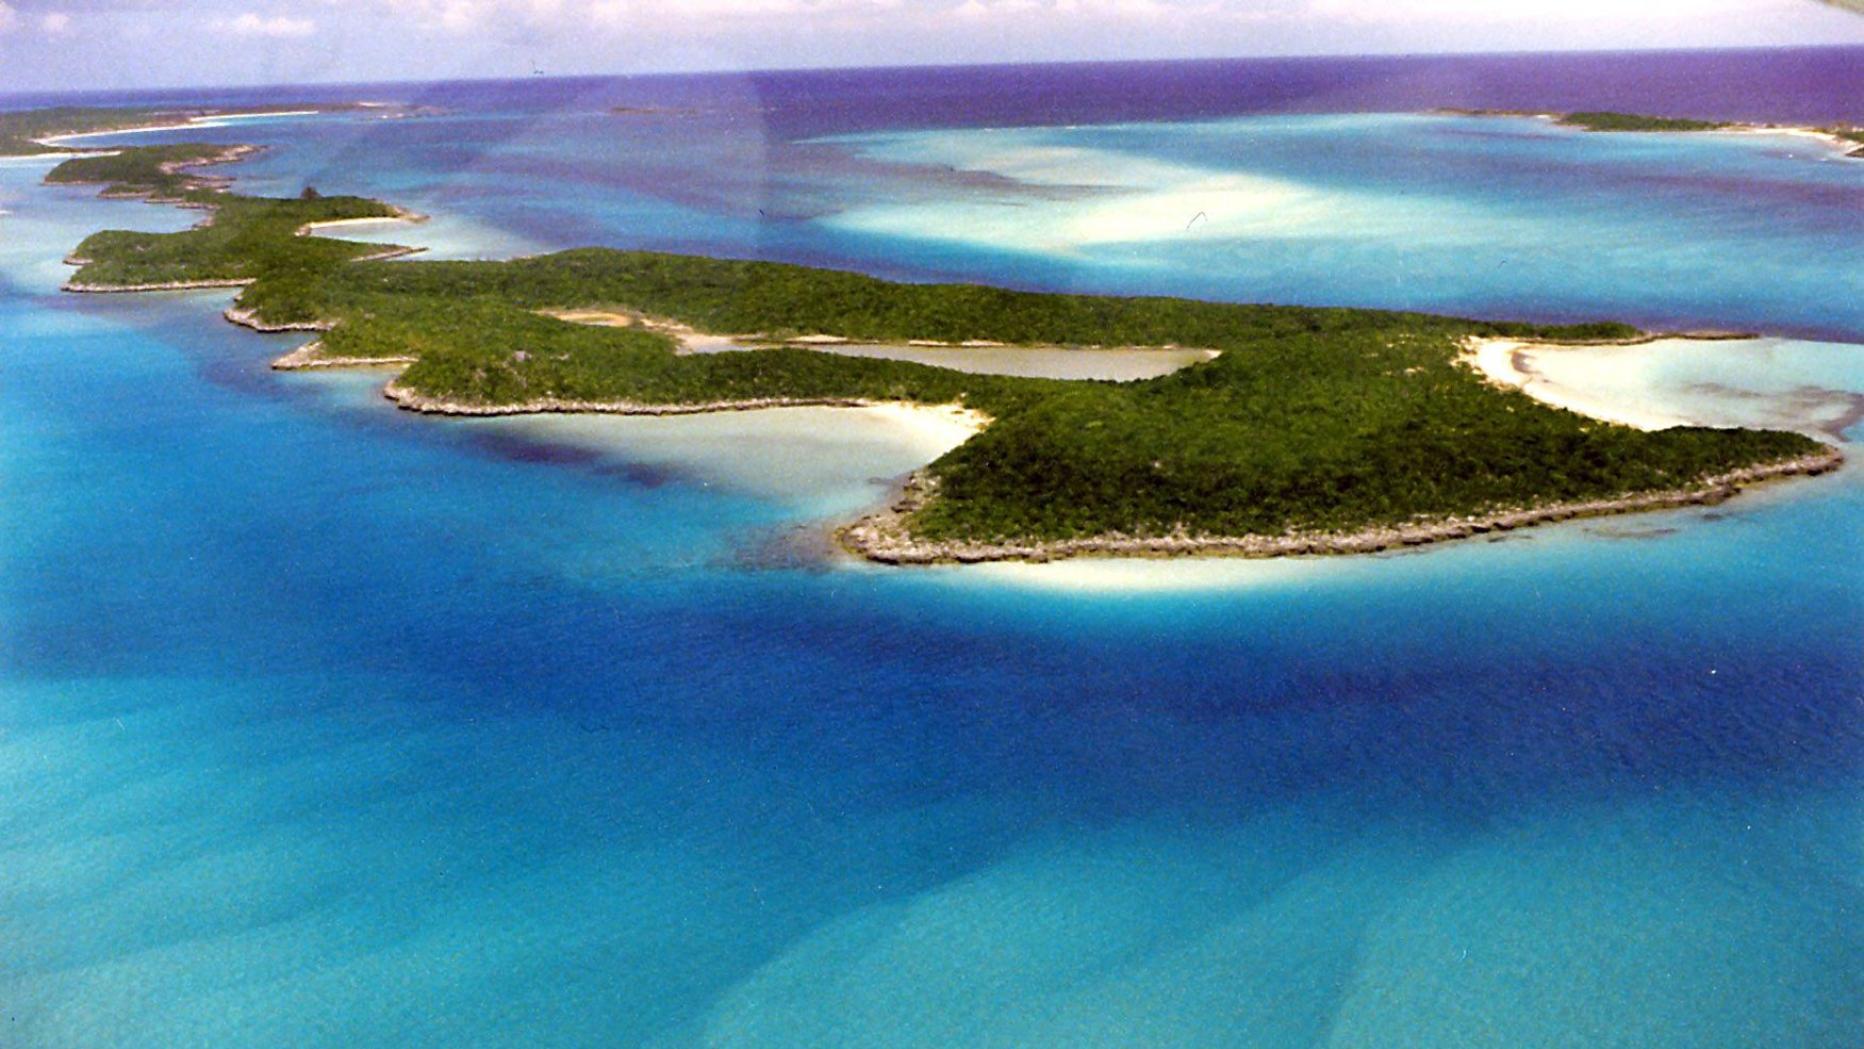 Little halls. Остров Джонни Деппа на Багамах. Остров little Hall’s Pond cay в багамском архипелаге. Остров Литтл Холлс Понд Кей. Личный остров Джонни Деппа.